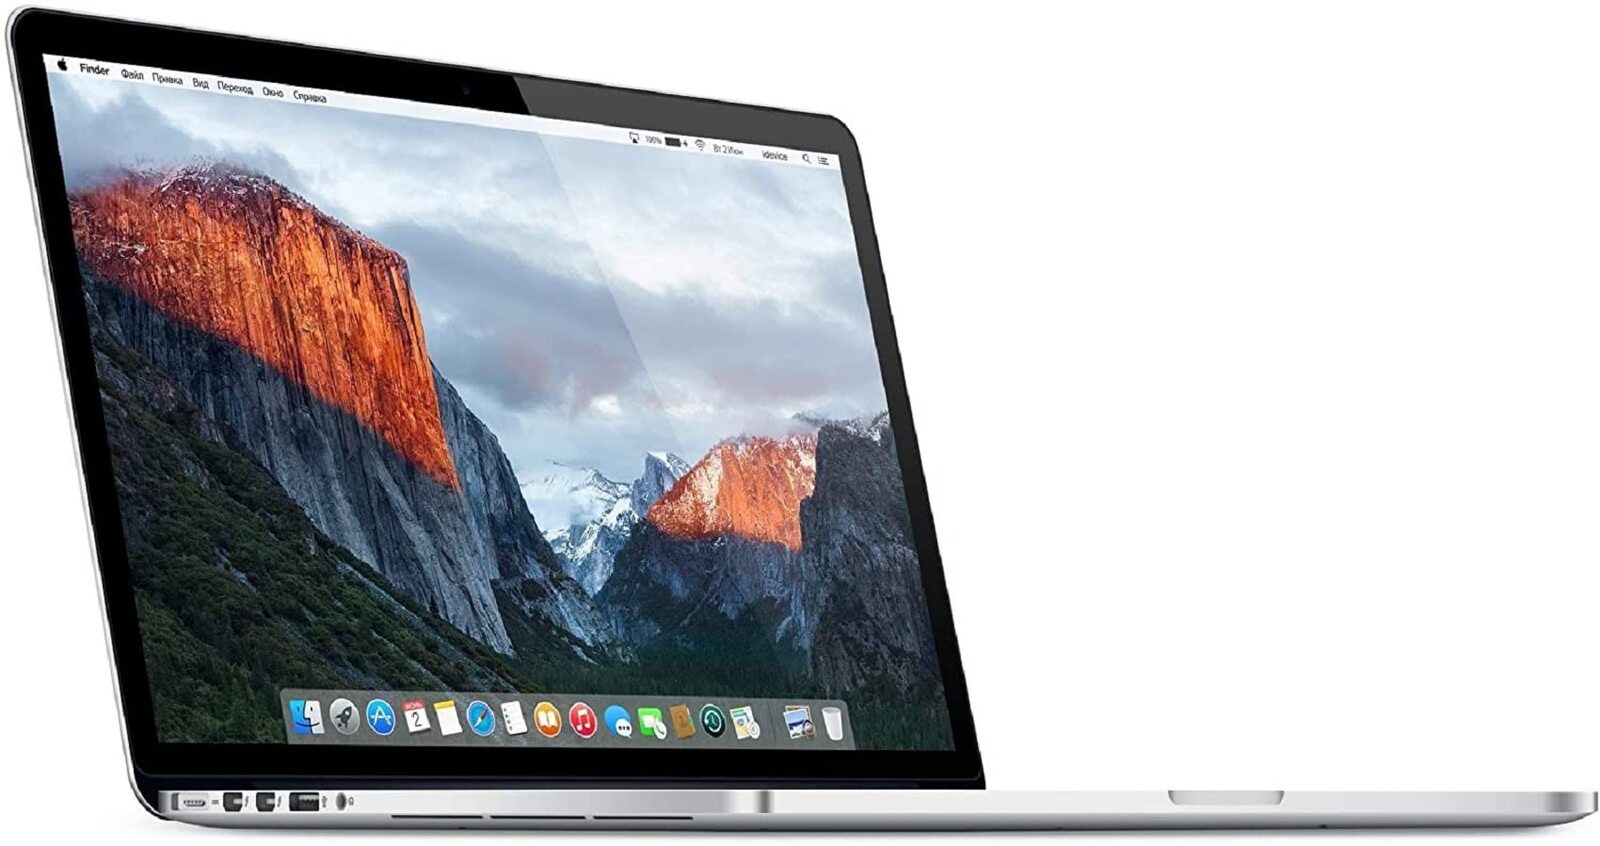 Apple MacBook Pro 15" Mid 2015 Intel i7 4770HQ 2.20GHz 16GB RAM 256GB SSD macOS Monterey Image 1